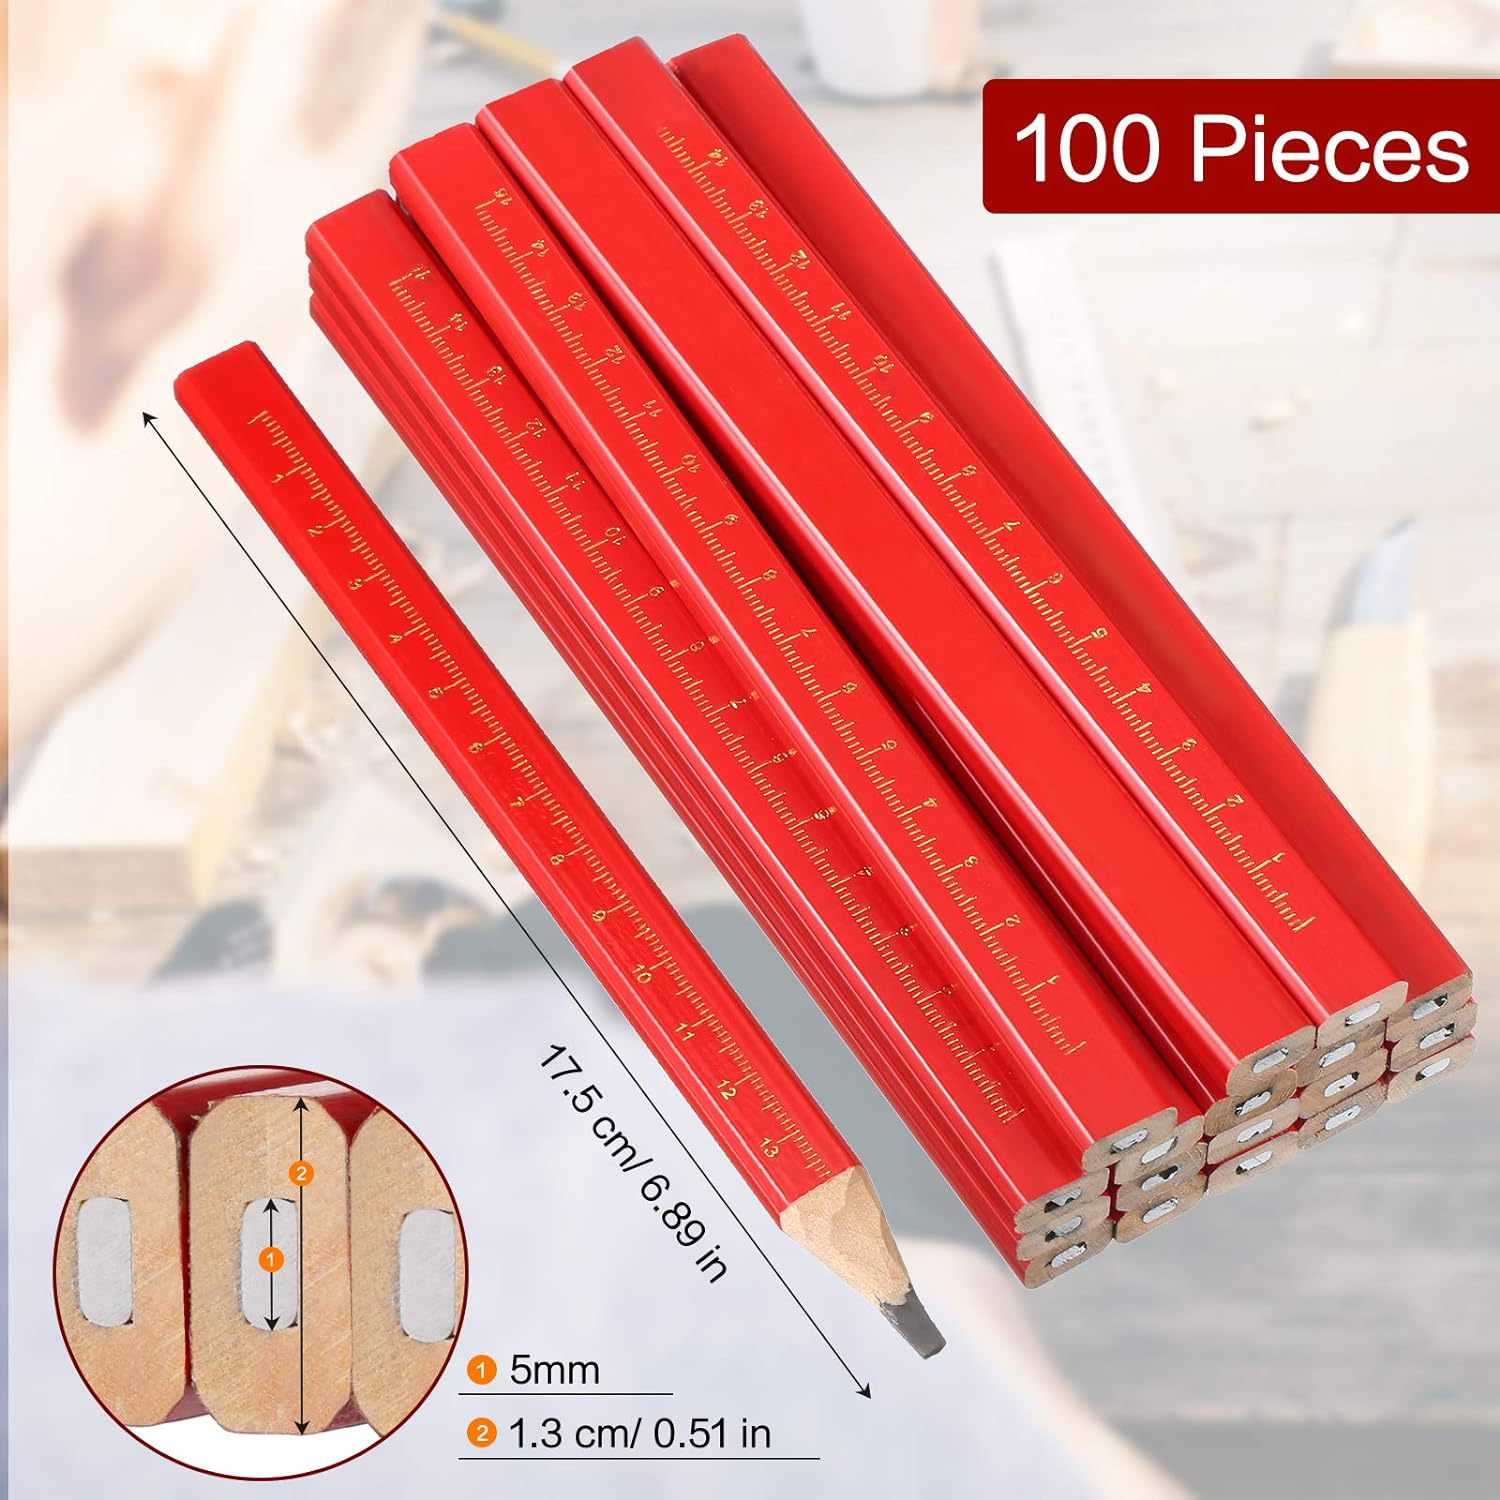 100 Pieces Octagonal Red Hard Black Carpenter Construction Pencils